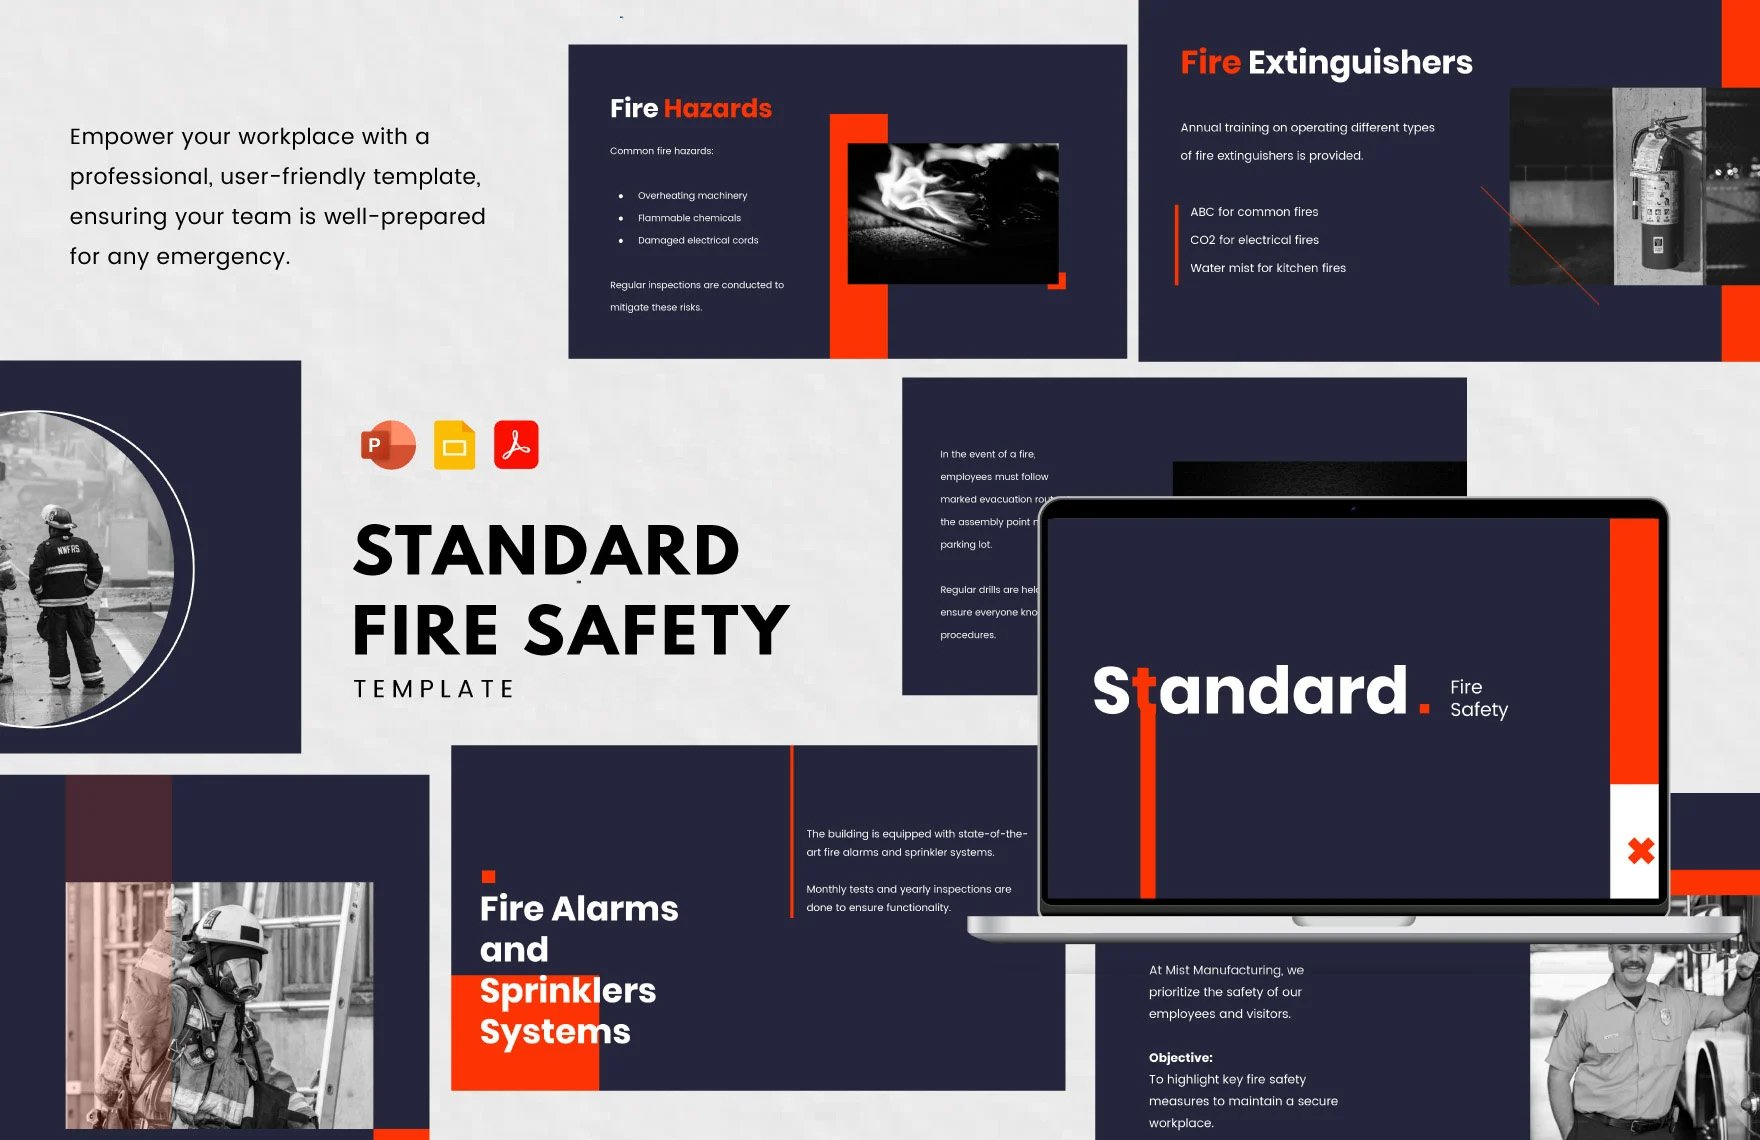 Standard Fire Safety